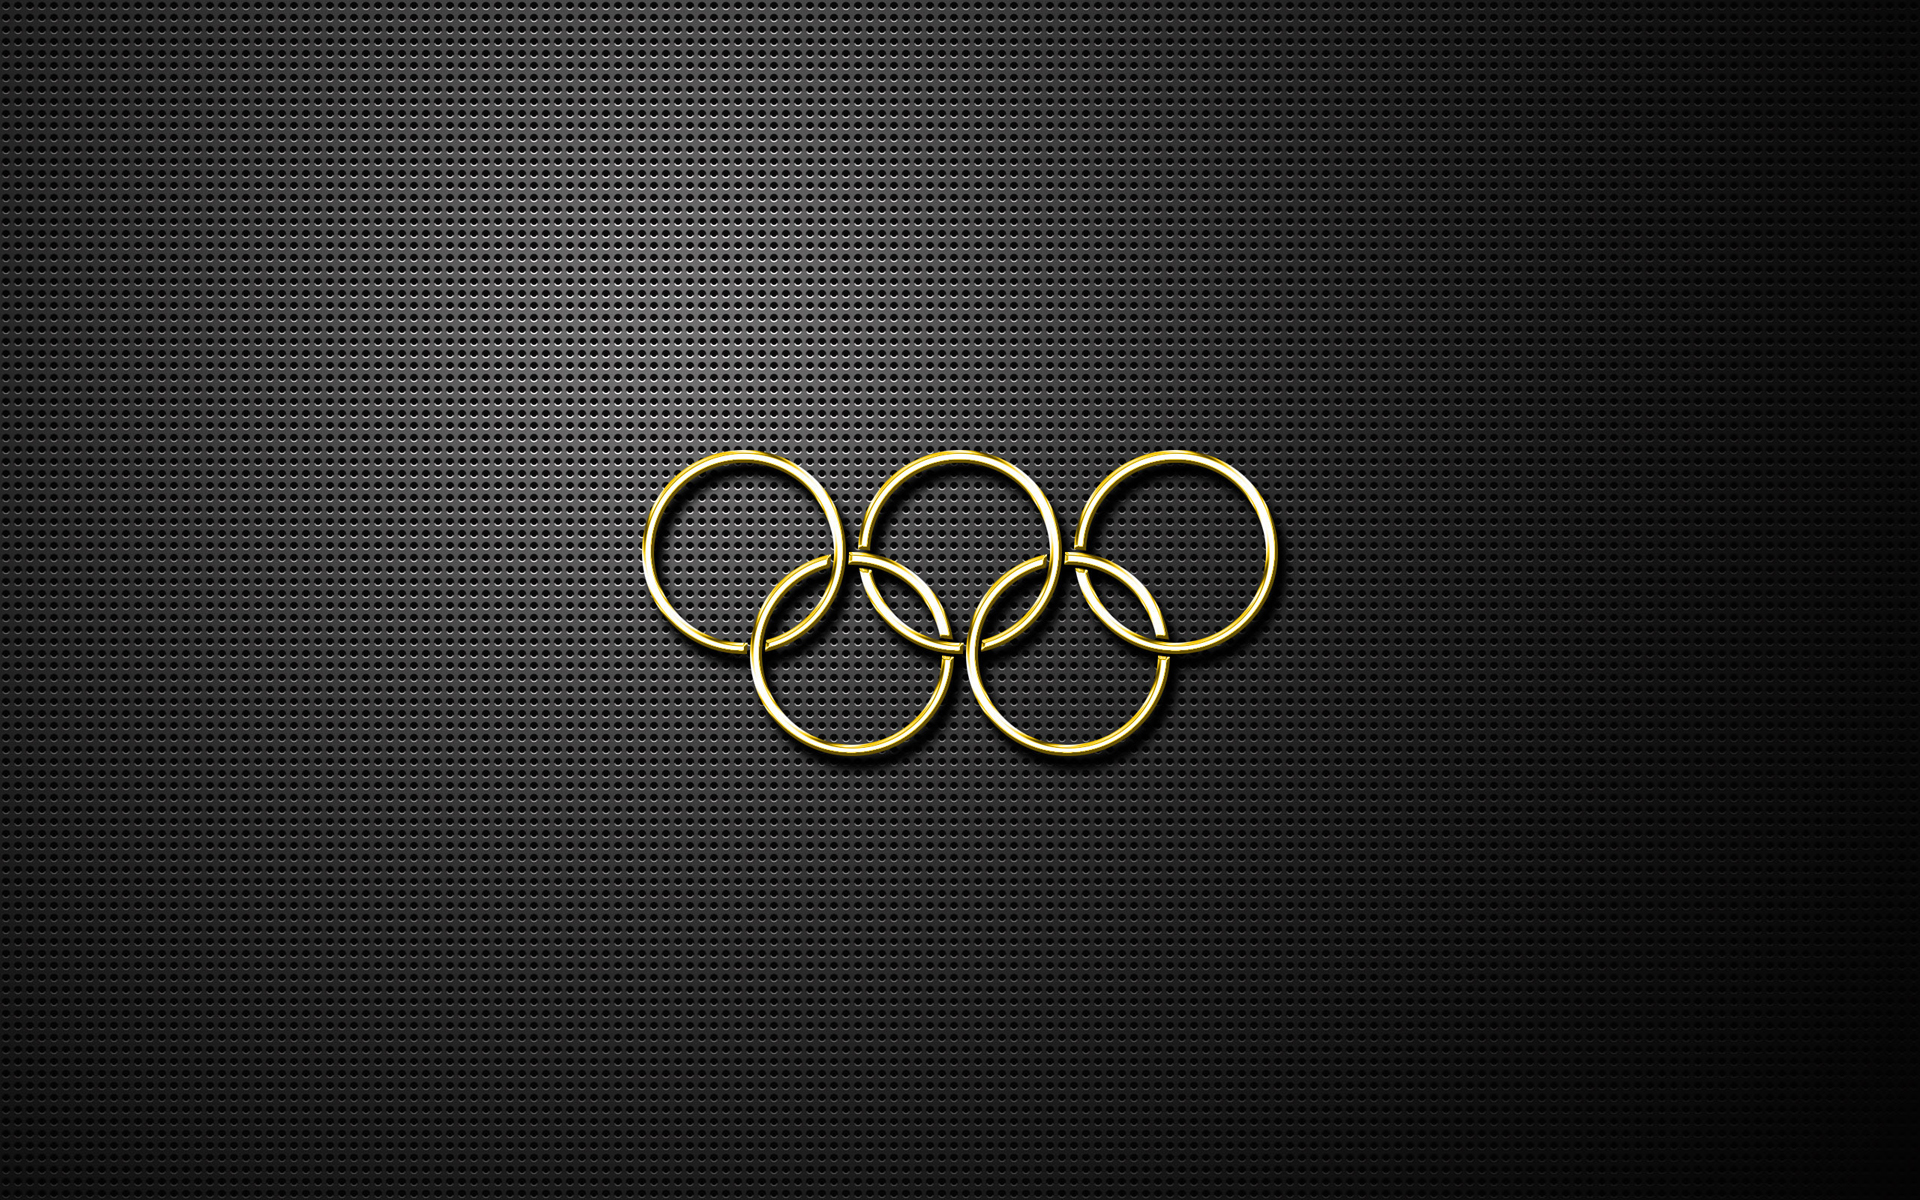 Спорт Экстрим Олимпийские кольца обои рабочий стол